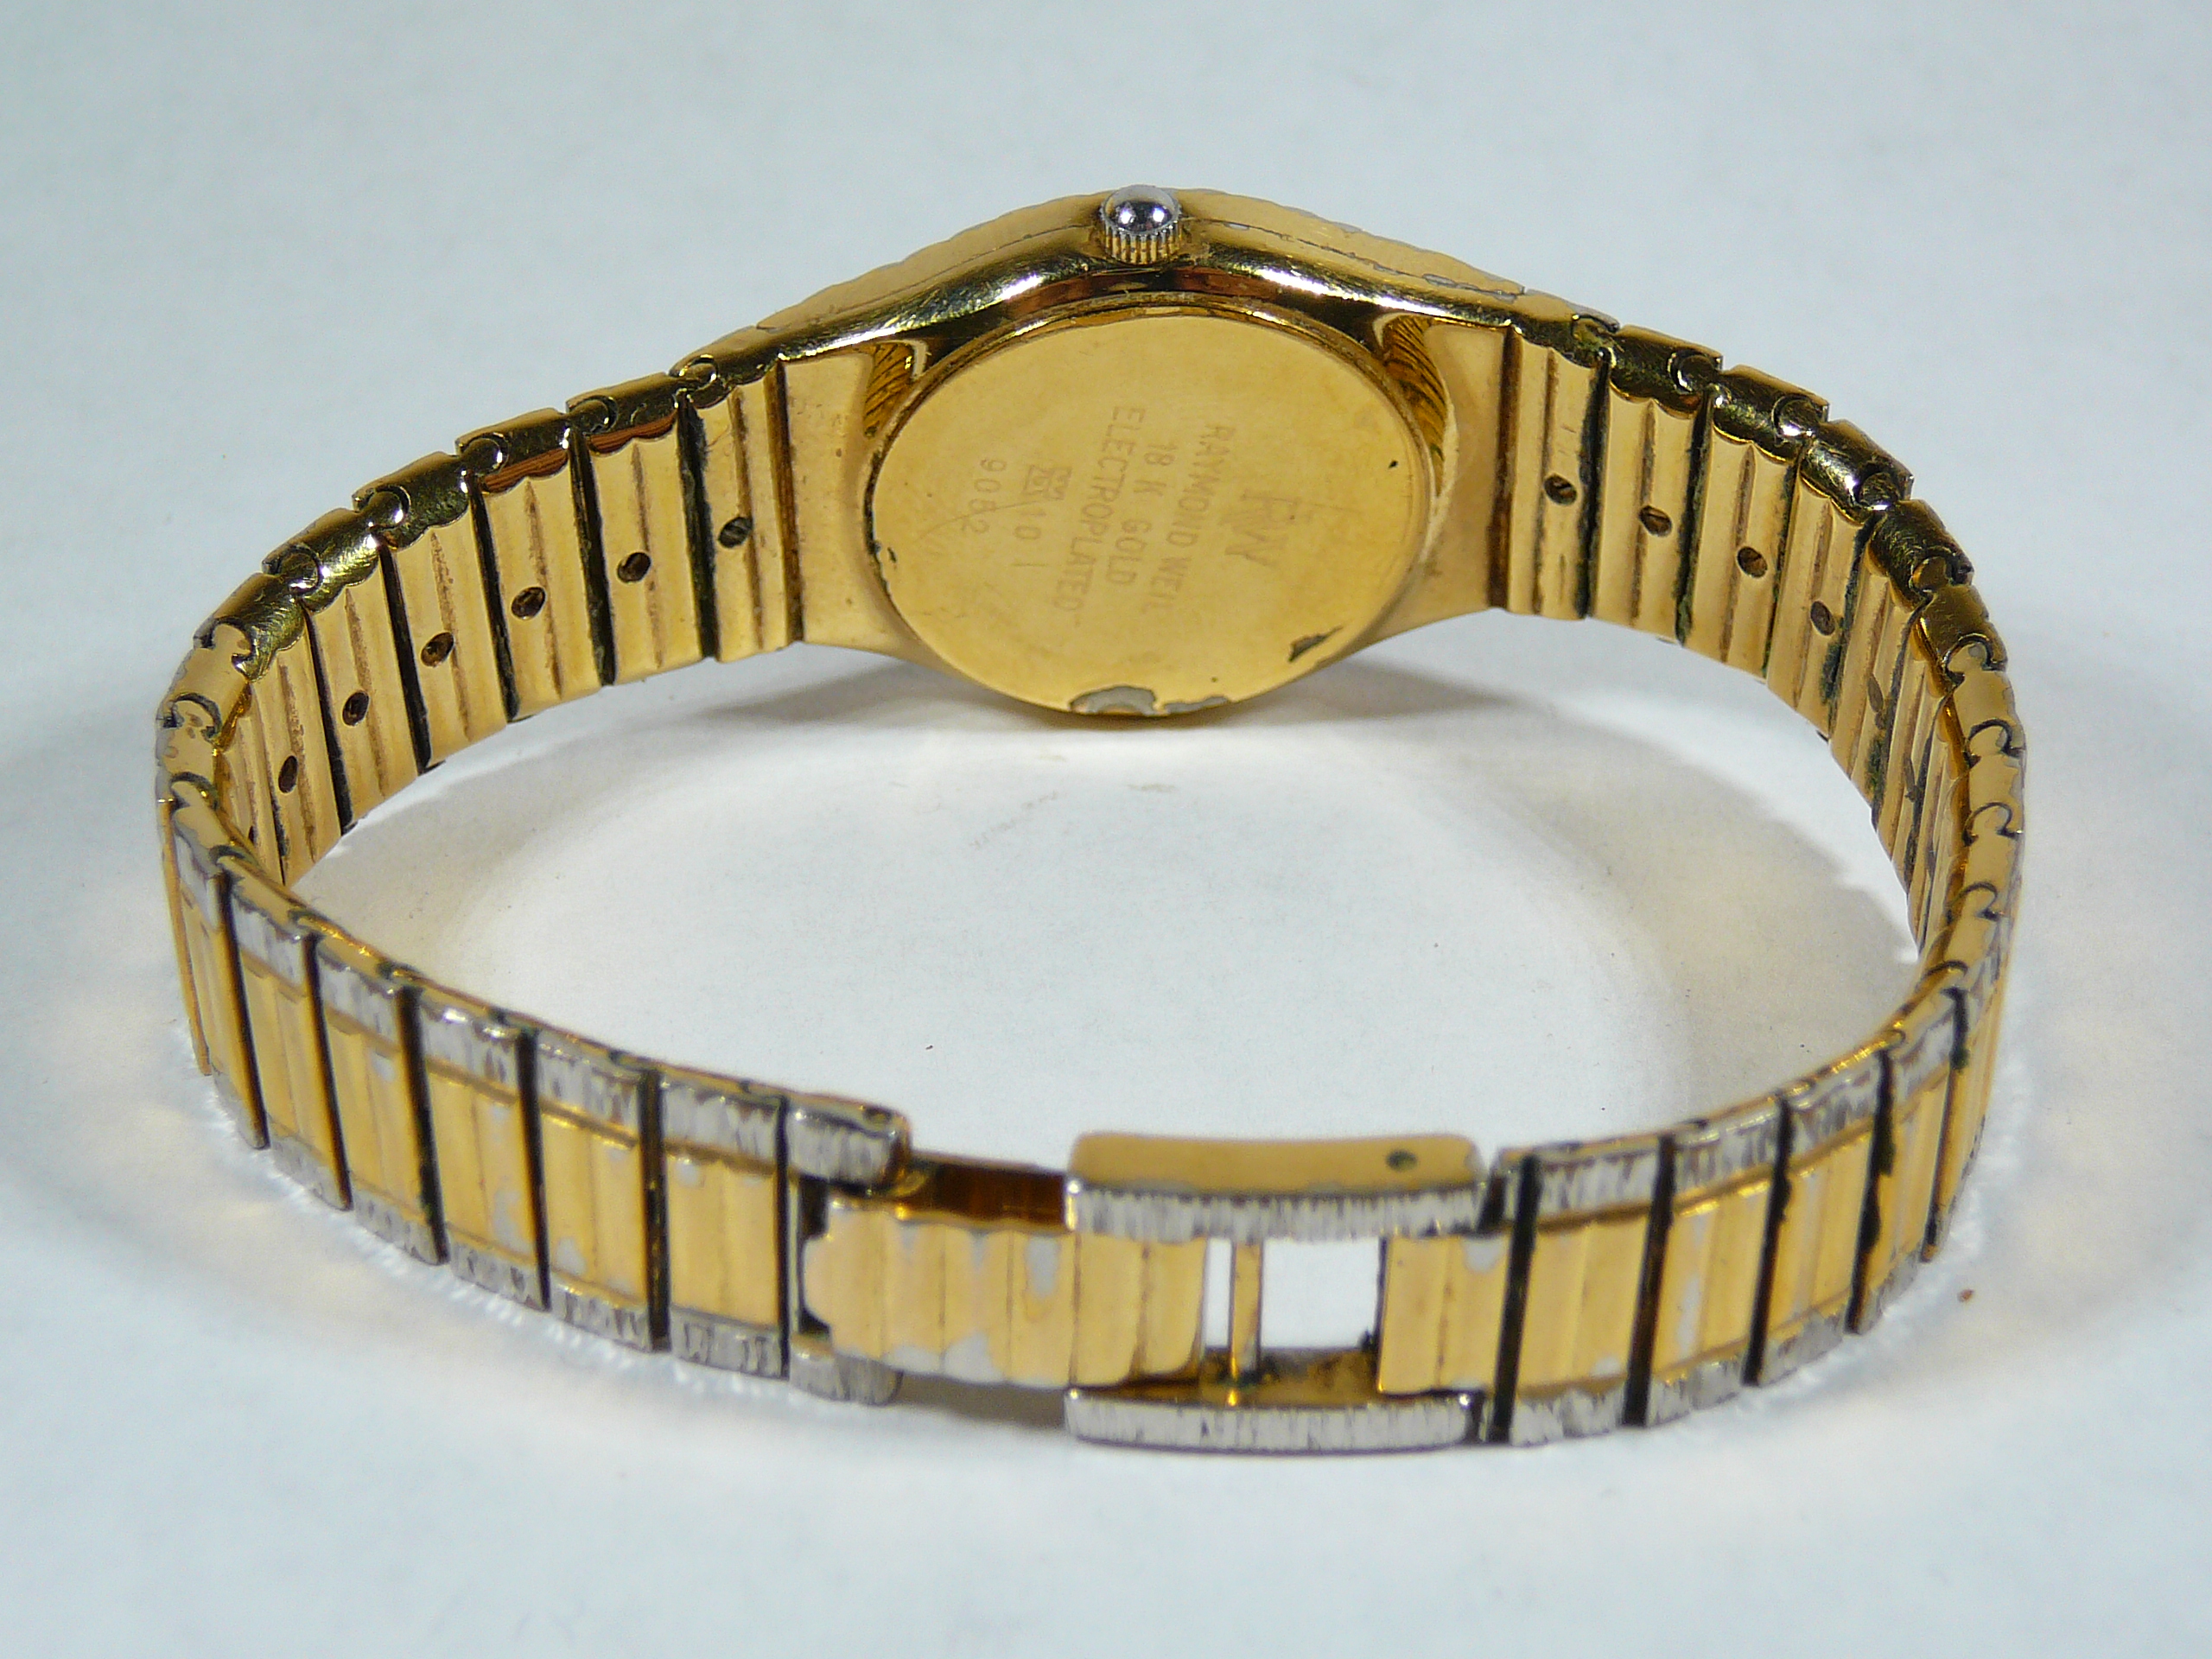 Ladies Raymond Weil Wrist Watch - Image 3 of 3